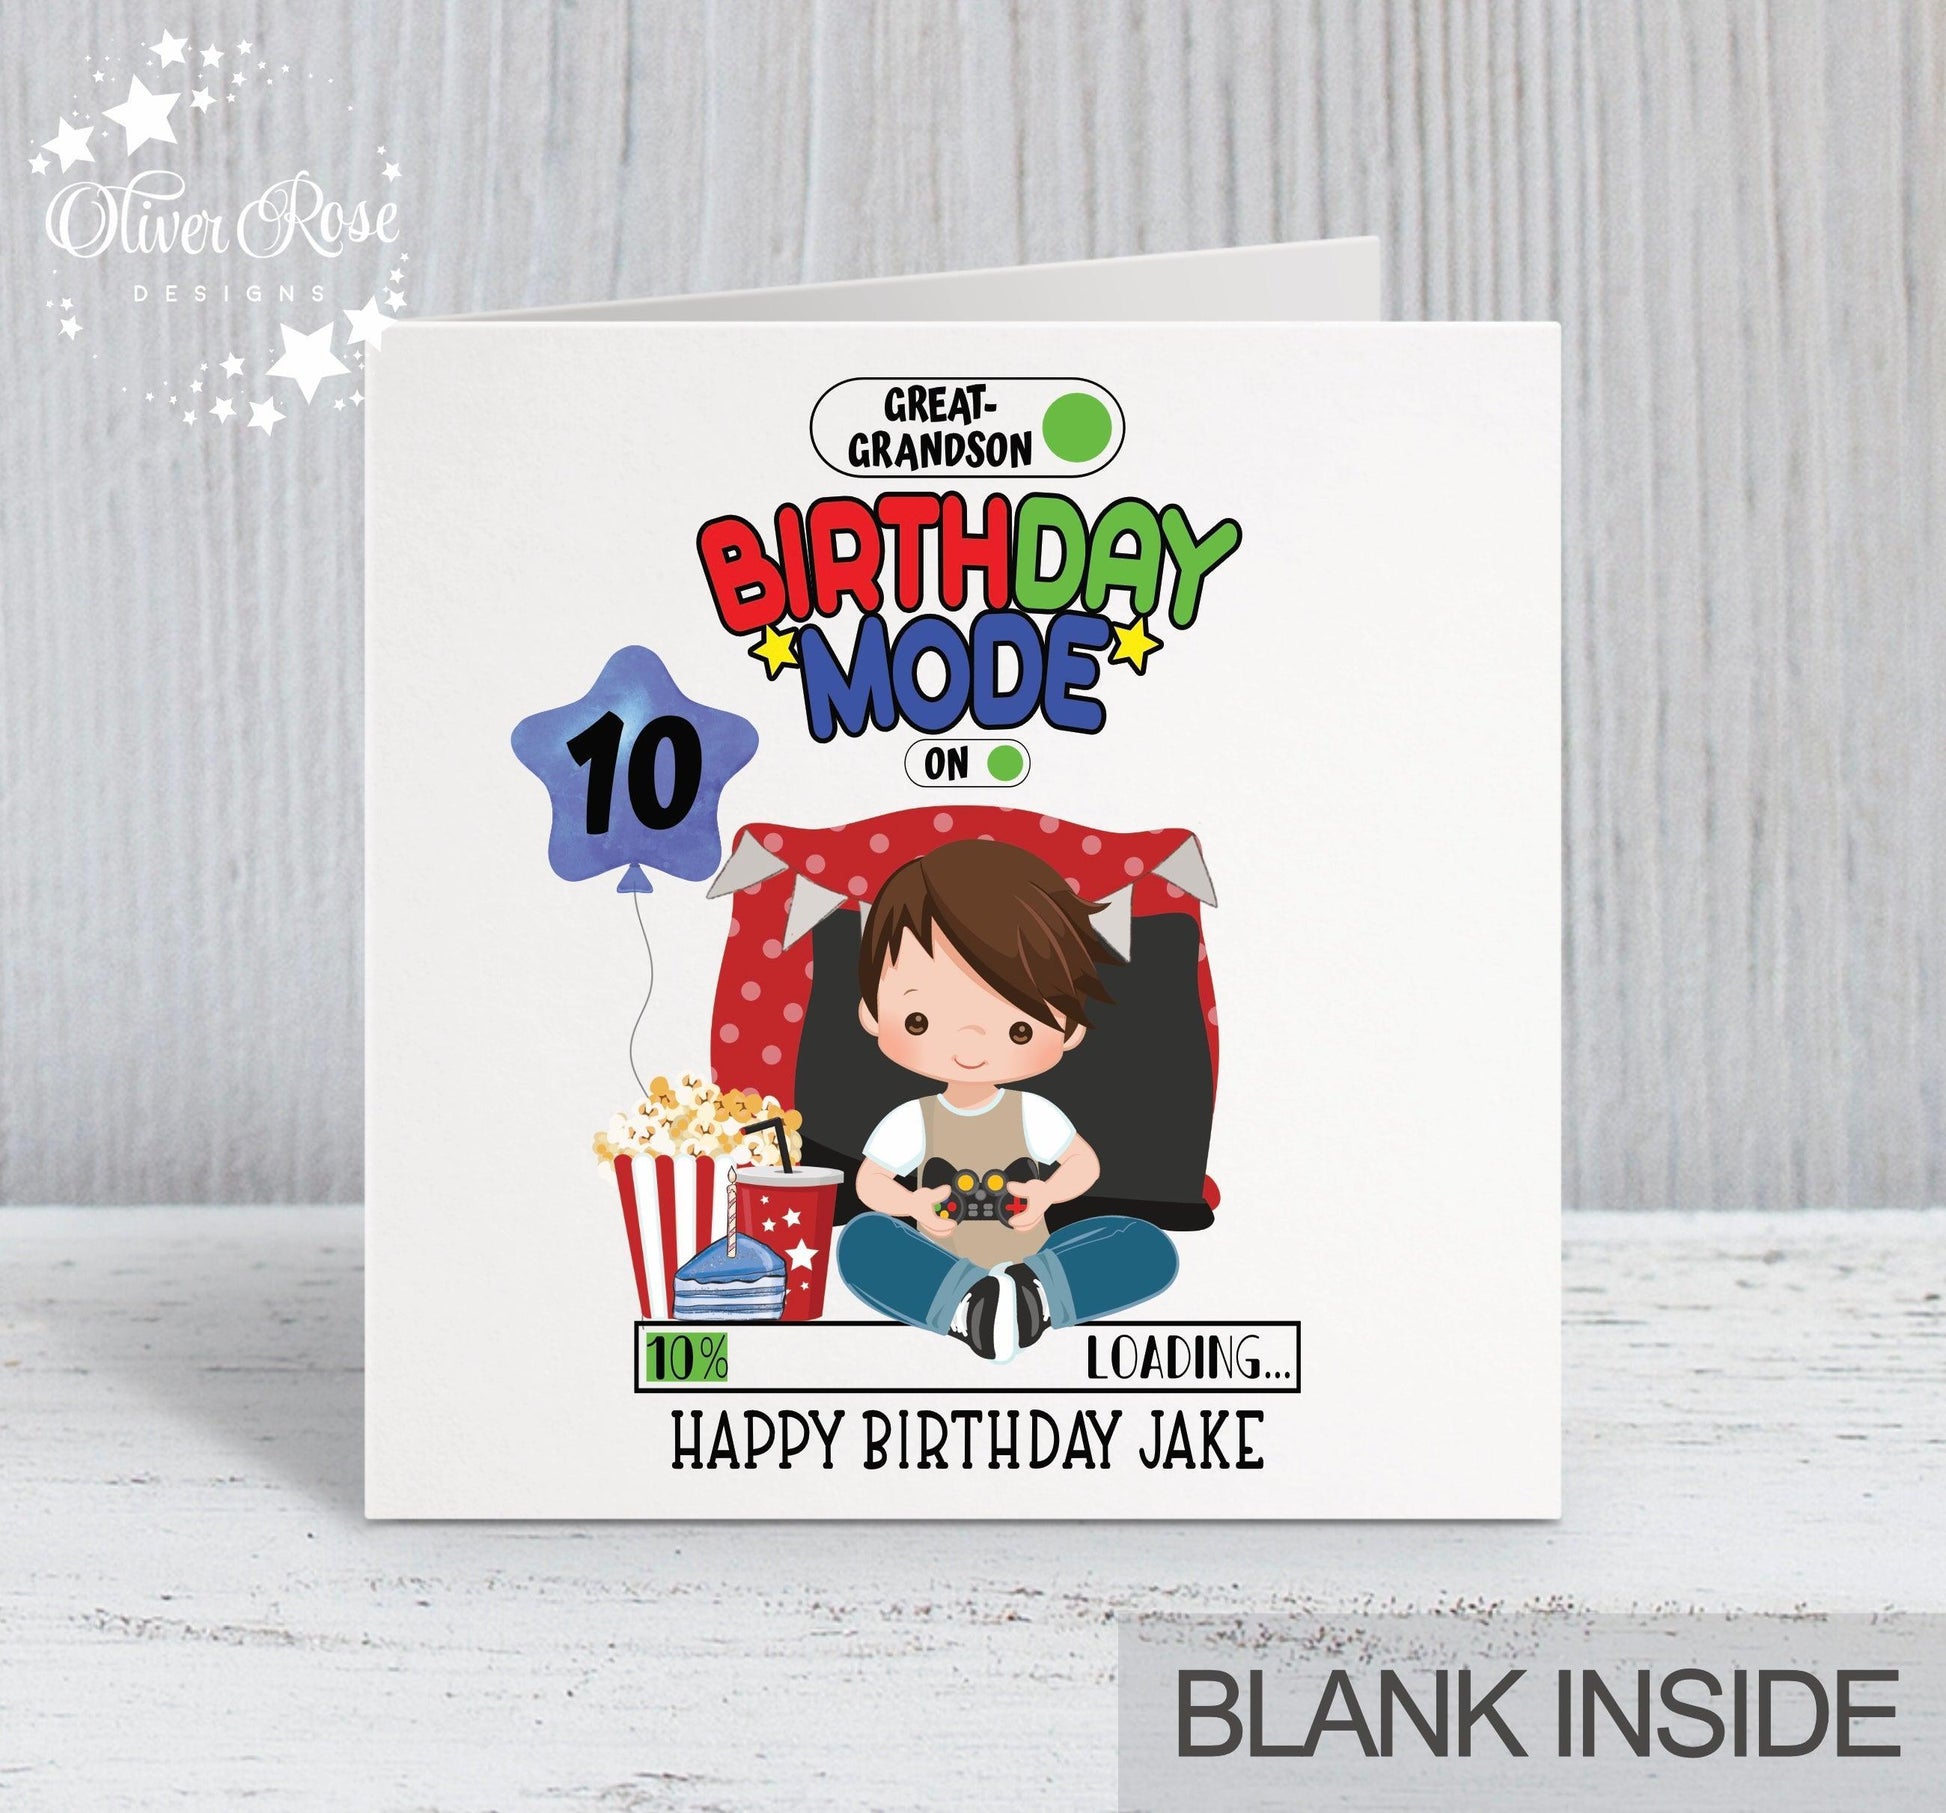 Gaming Gamer Theme Birthday Card, Boys, Personalised Card, 12th Birthday Card, Great-Grandson